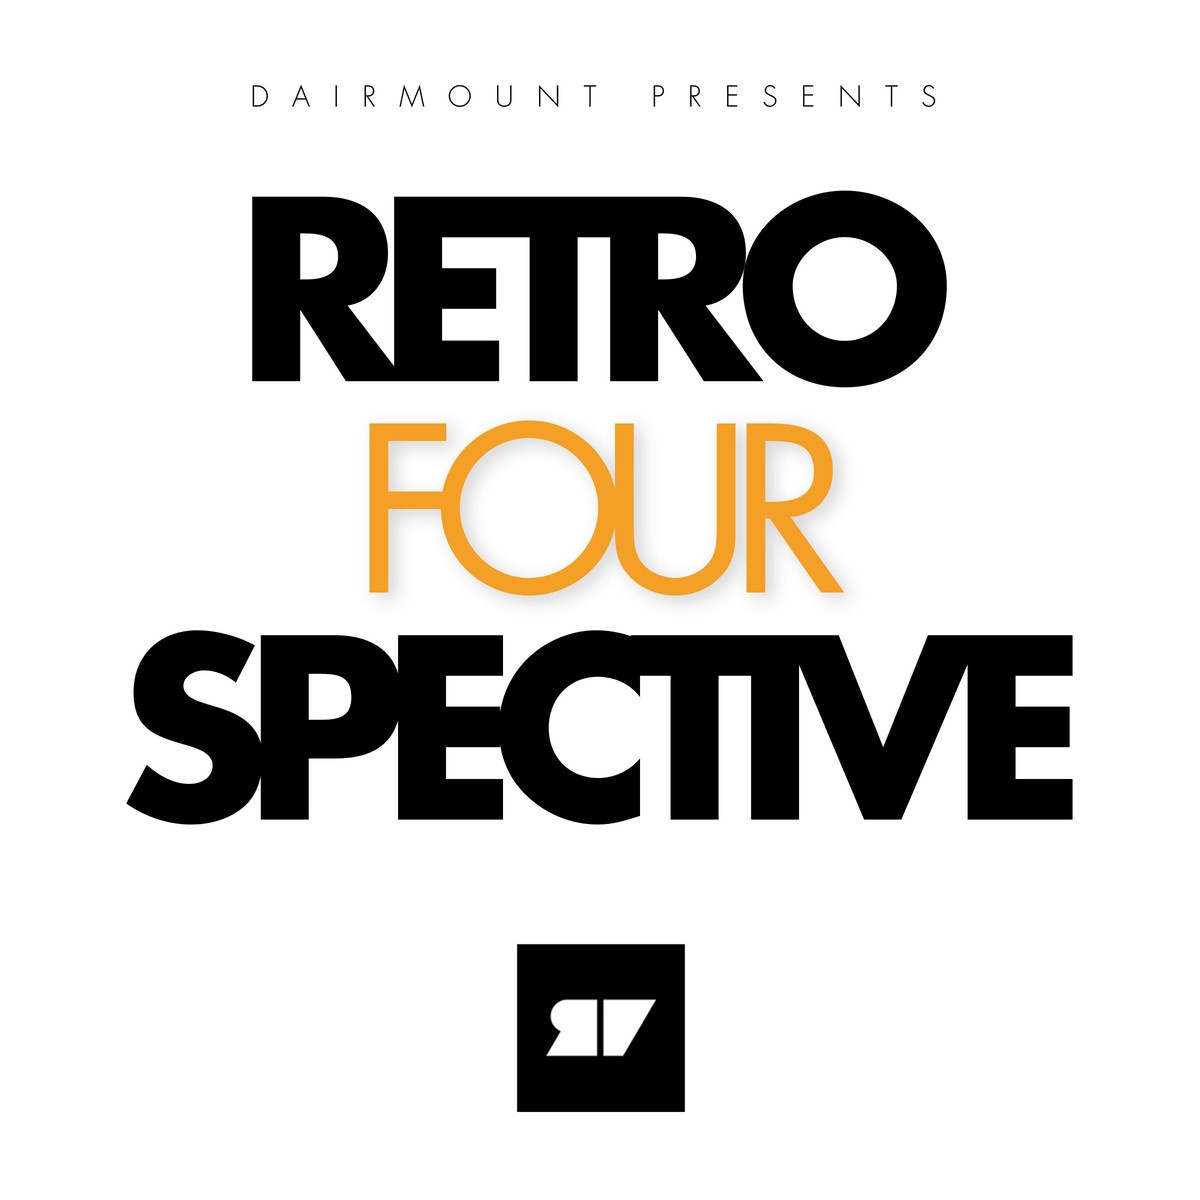 Dairmount Presents Retroperspective 4